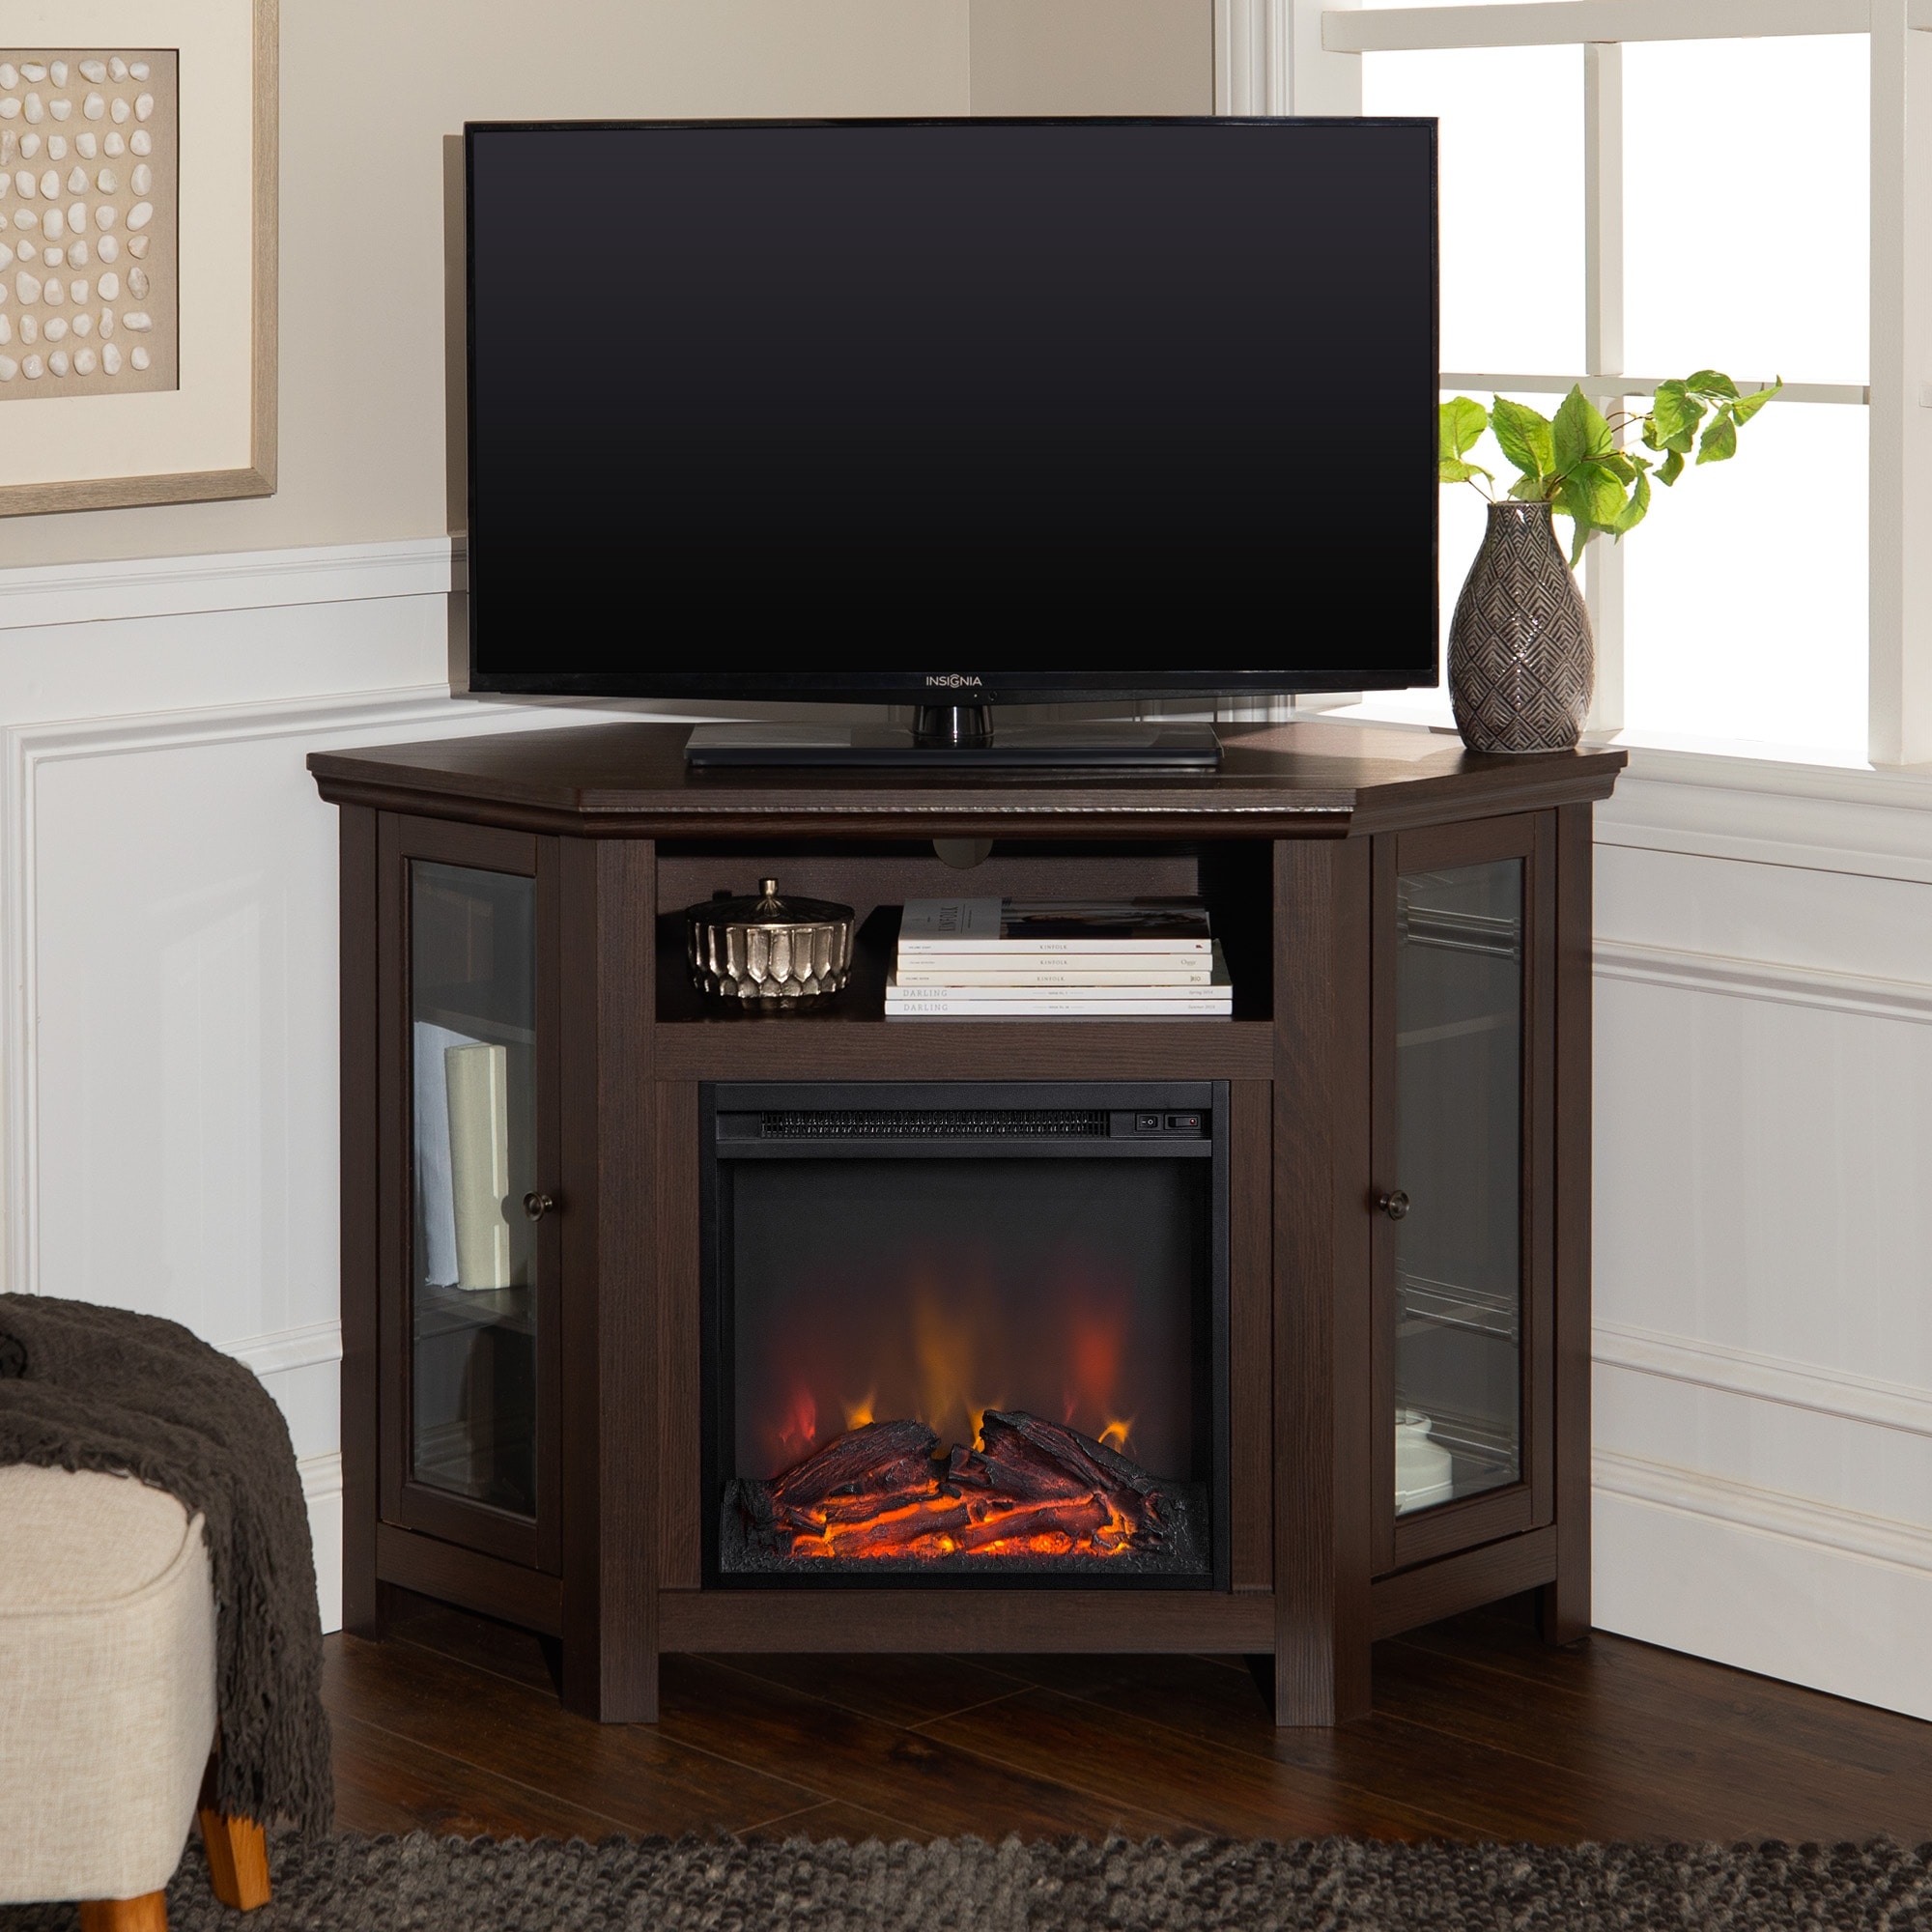 Middlebrook Designs 48-inch Corner Fireplace TV Stand